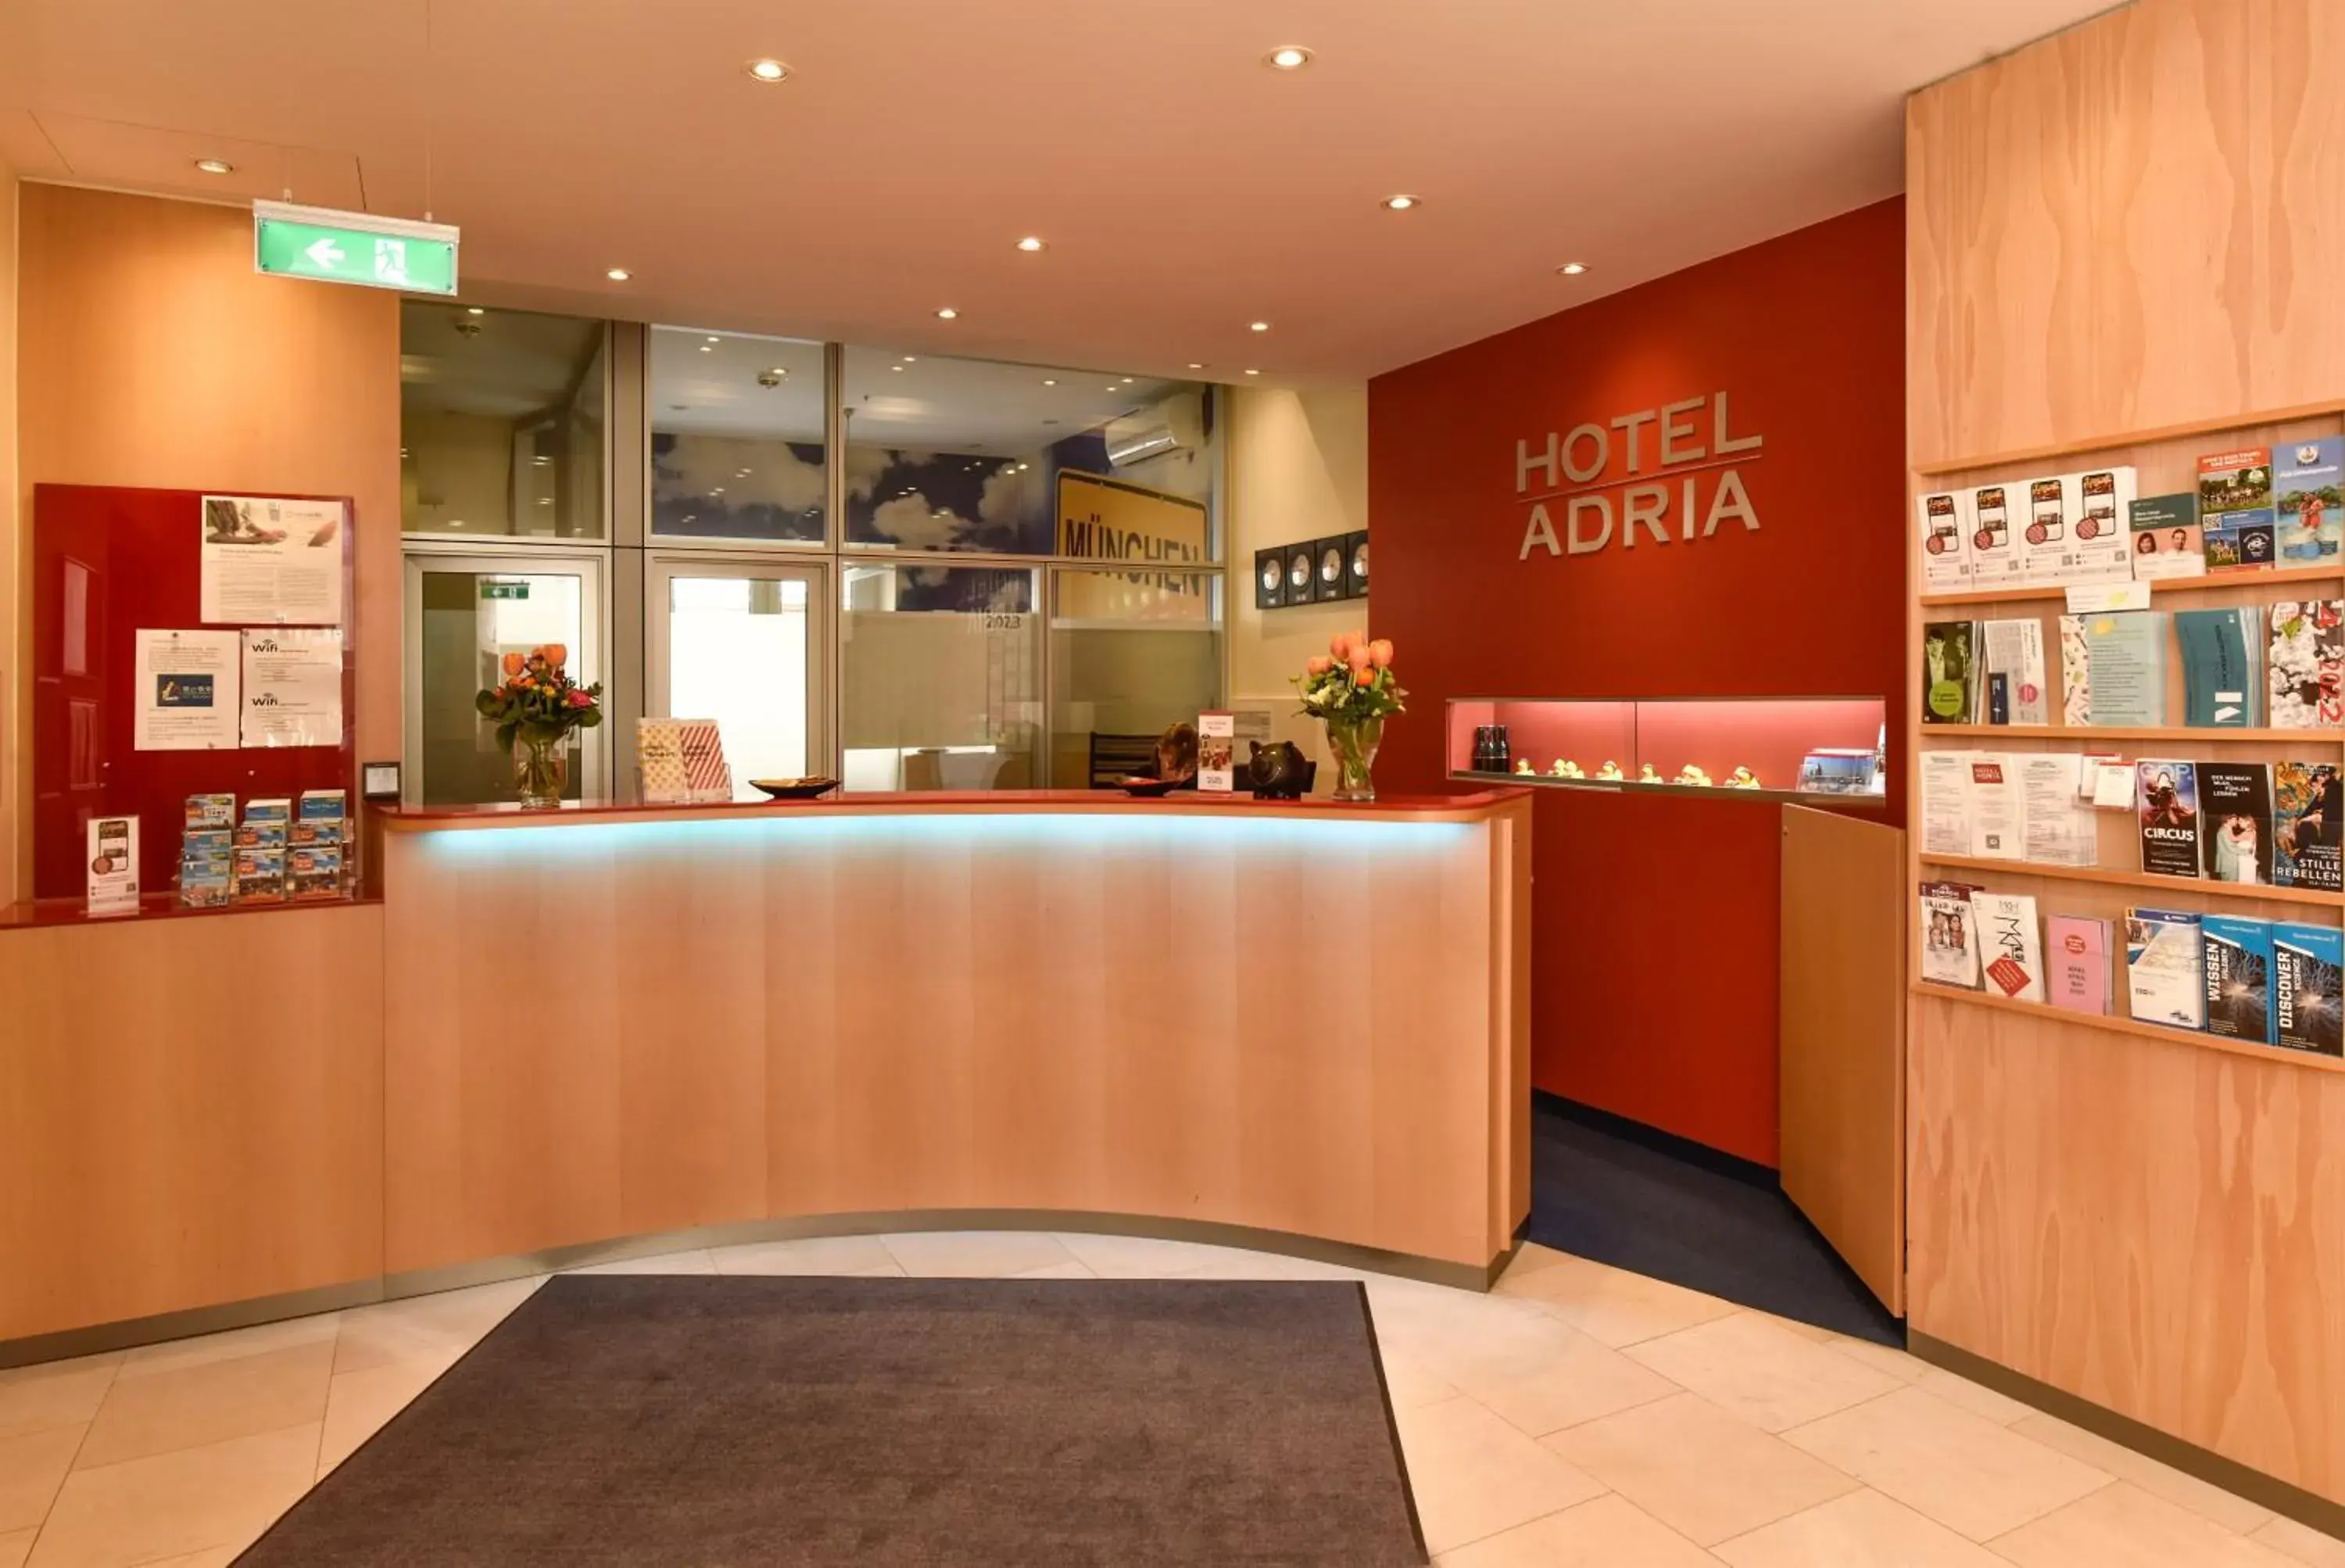 Lobby or reception in Hotel ADRIA München